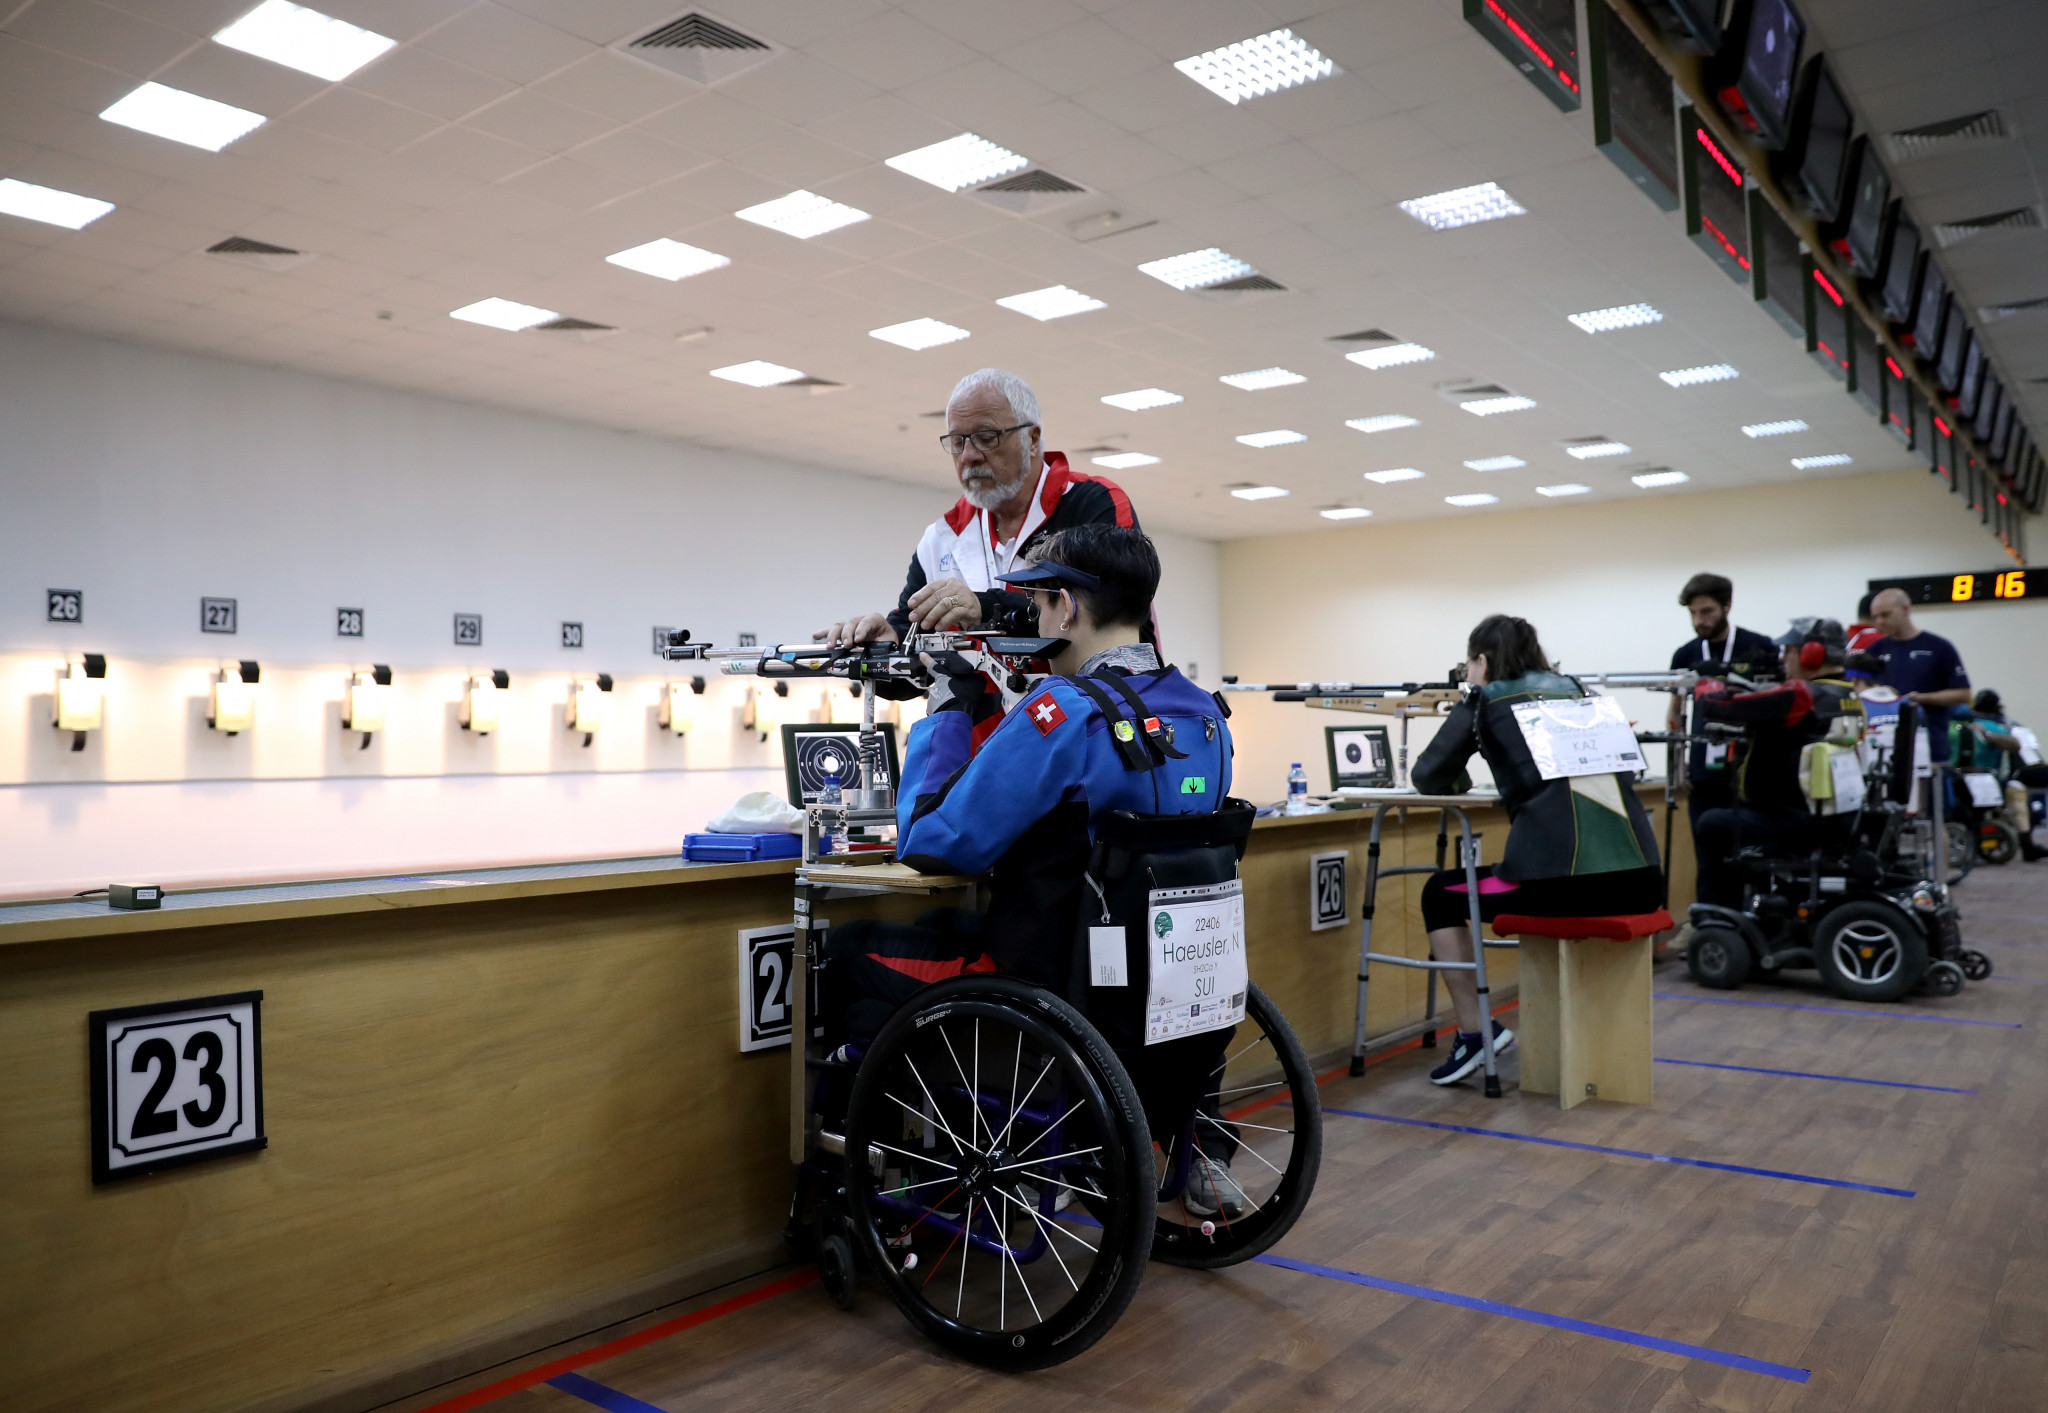 Sydney awarded 2019 World Shooting Para Sport World Championships